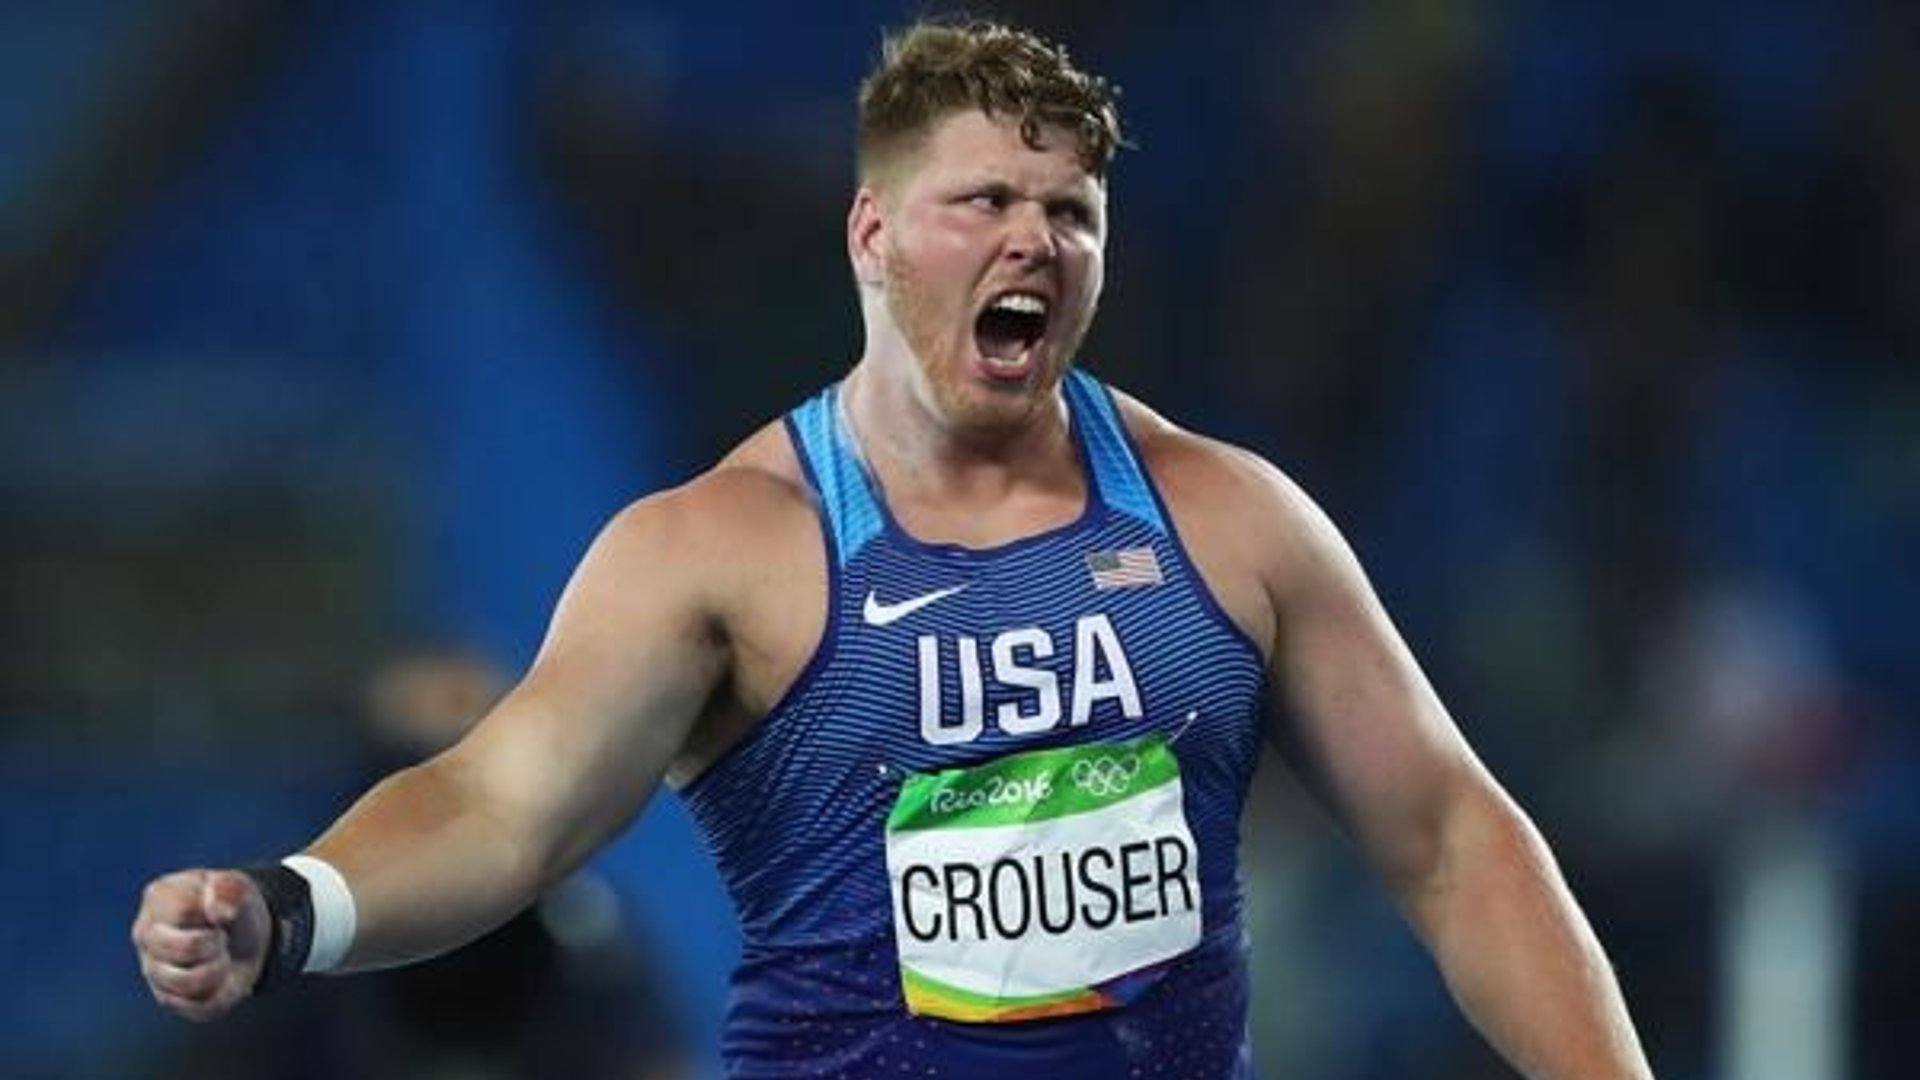 Ryan Crouser in Rio Olympics 2016 (Image Credits - World Athletics)